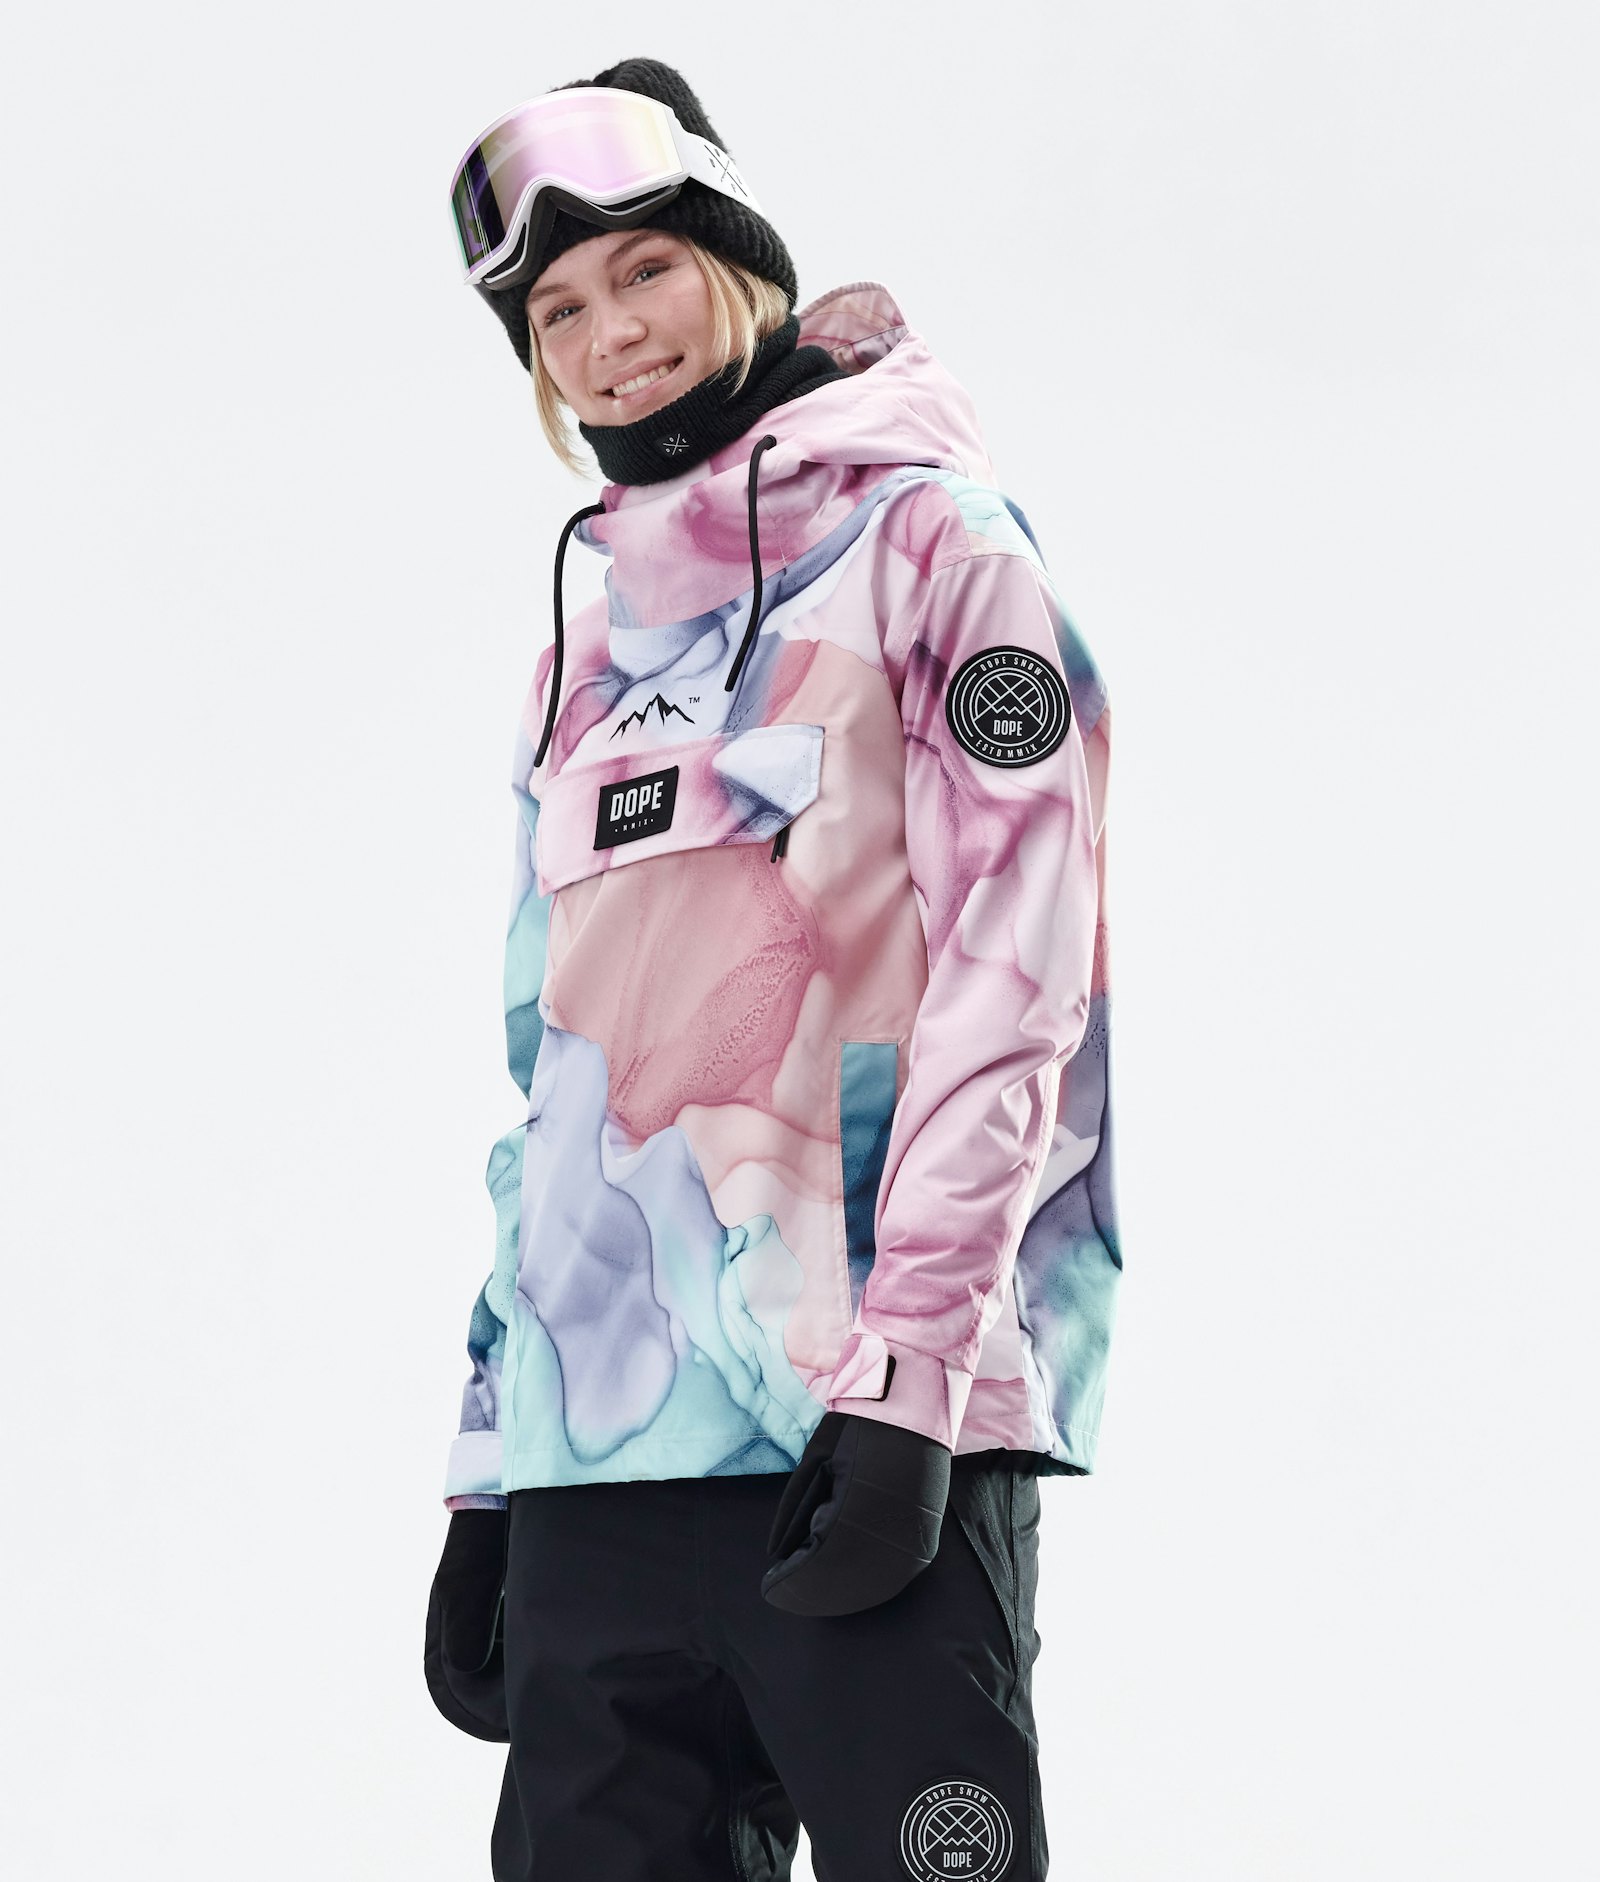 Blizzard W 2020 Ski Jacket Women Mirage